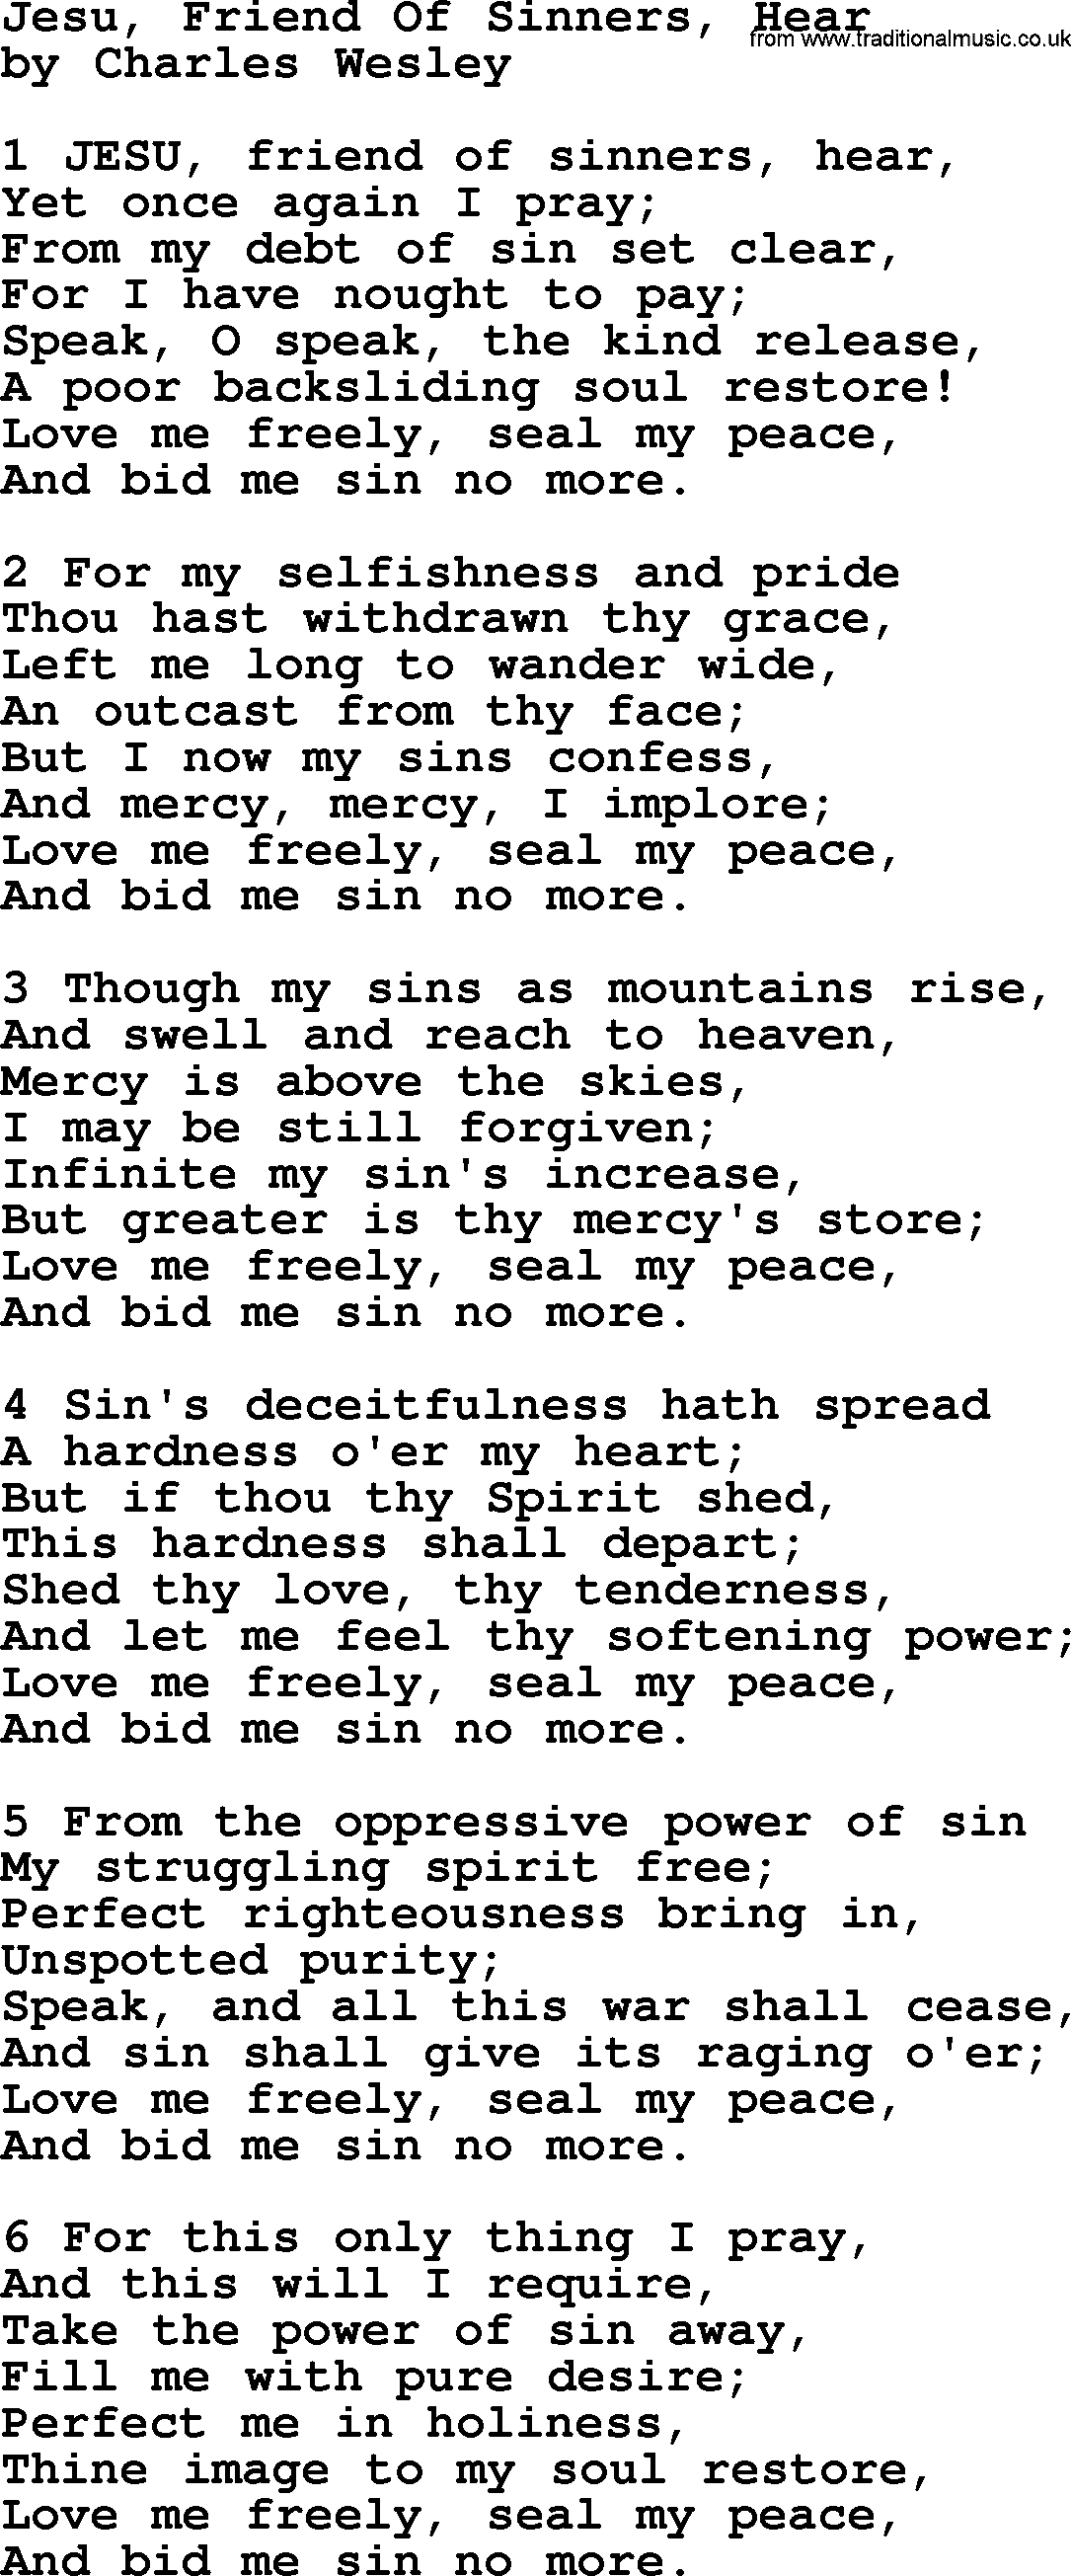 Charles Wesley hymn: Jesu, Friend Of Sinners, Hear, lyrics